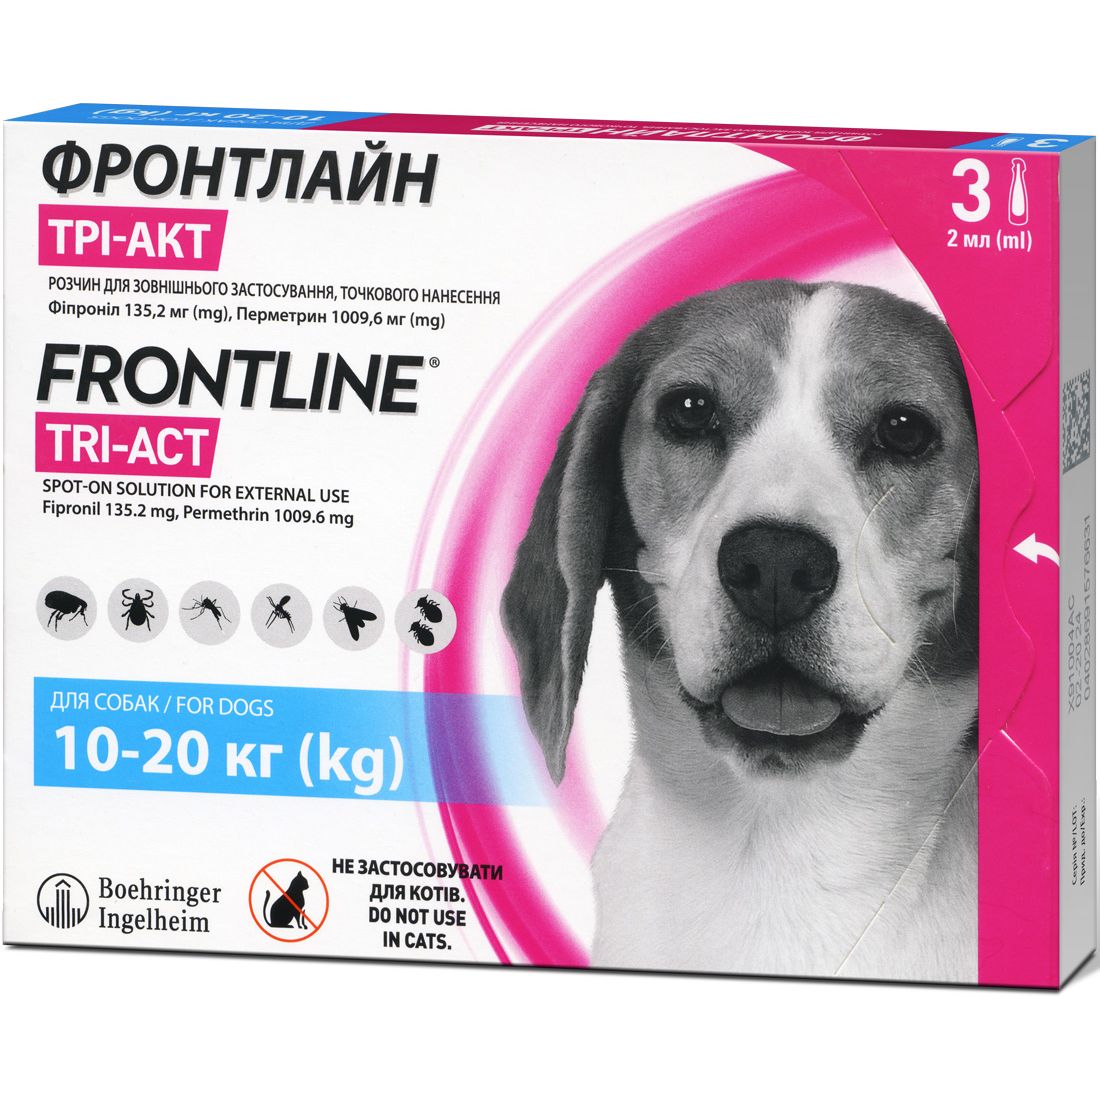 Капли Boehringer Ingelheim Frontline Tri-Act от блох и клещей для собак 10-20 кг 6 мл (3 шт. х 2 мл) (159913) - фото 2